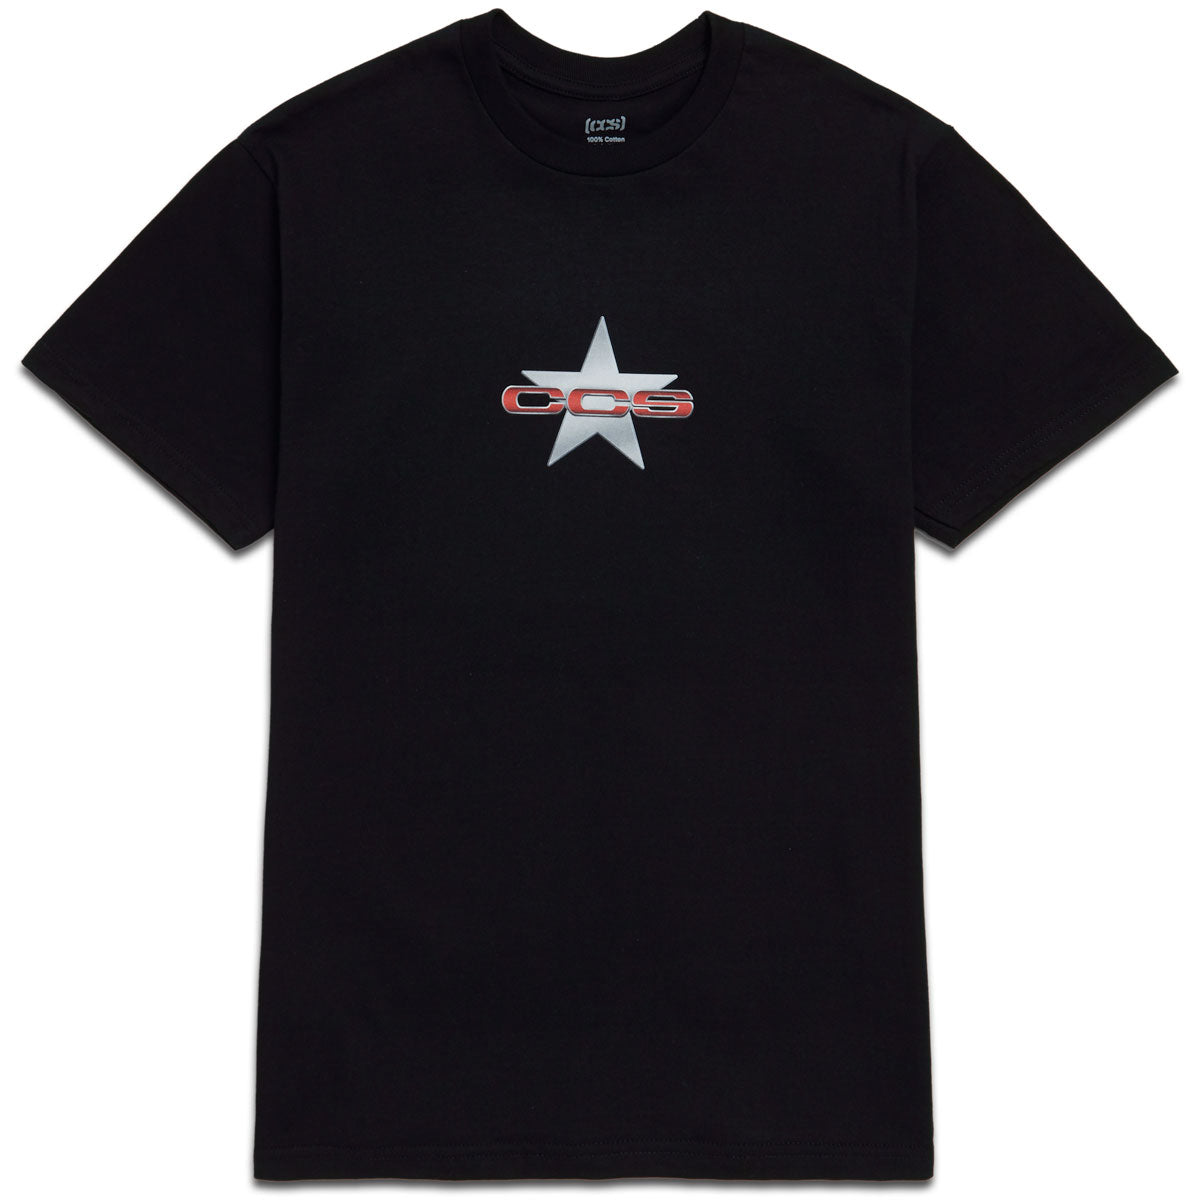 CCS 97 Star T-Shirt - Black - SM image 1